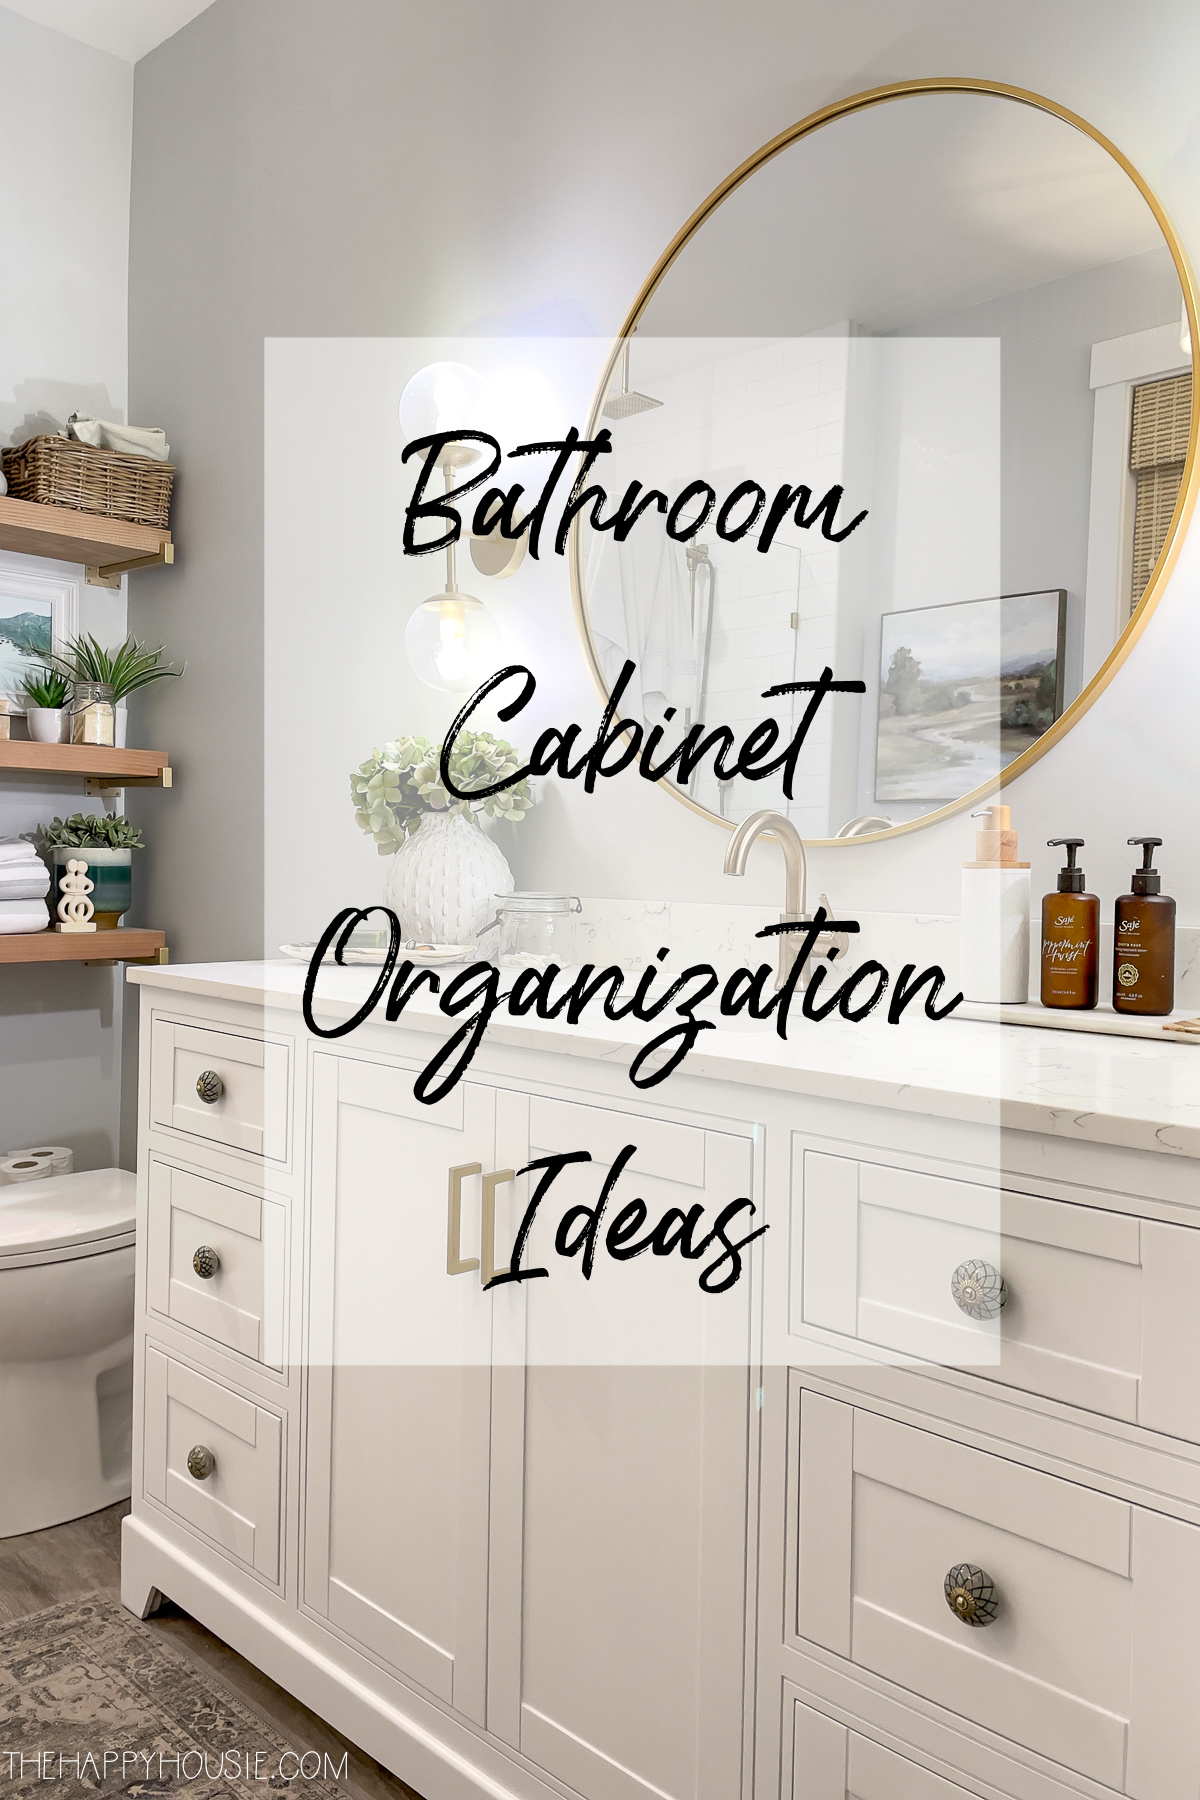 Small Bathroom Cabinet Organization - Small Stuff Counts